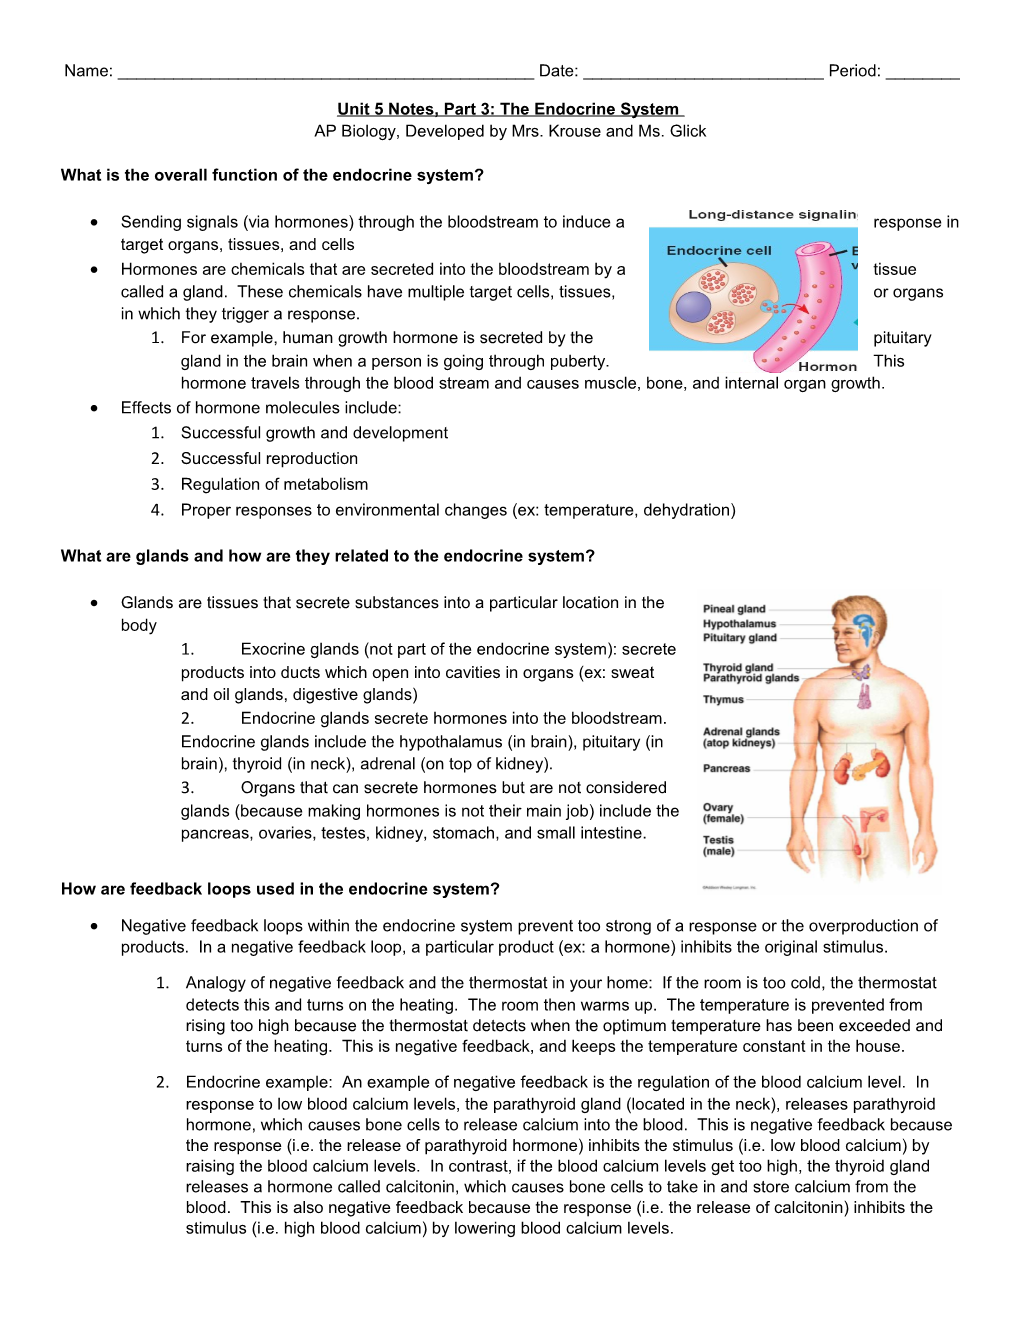 Unit 5 Notes, Part 3: the Endocrine System